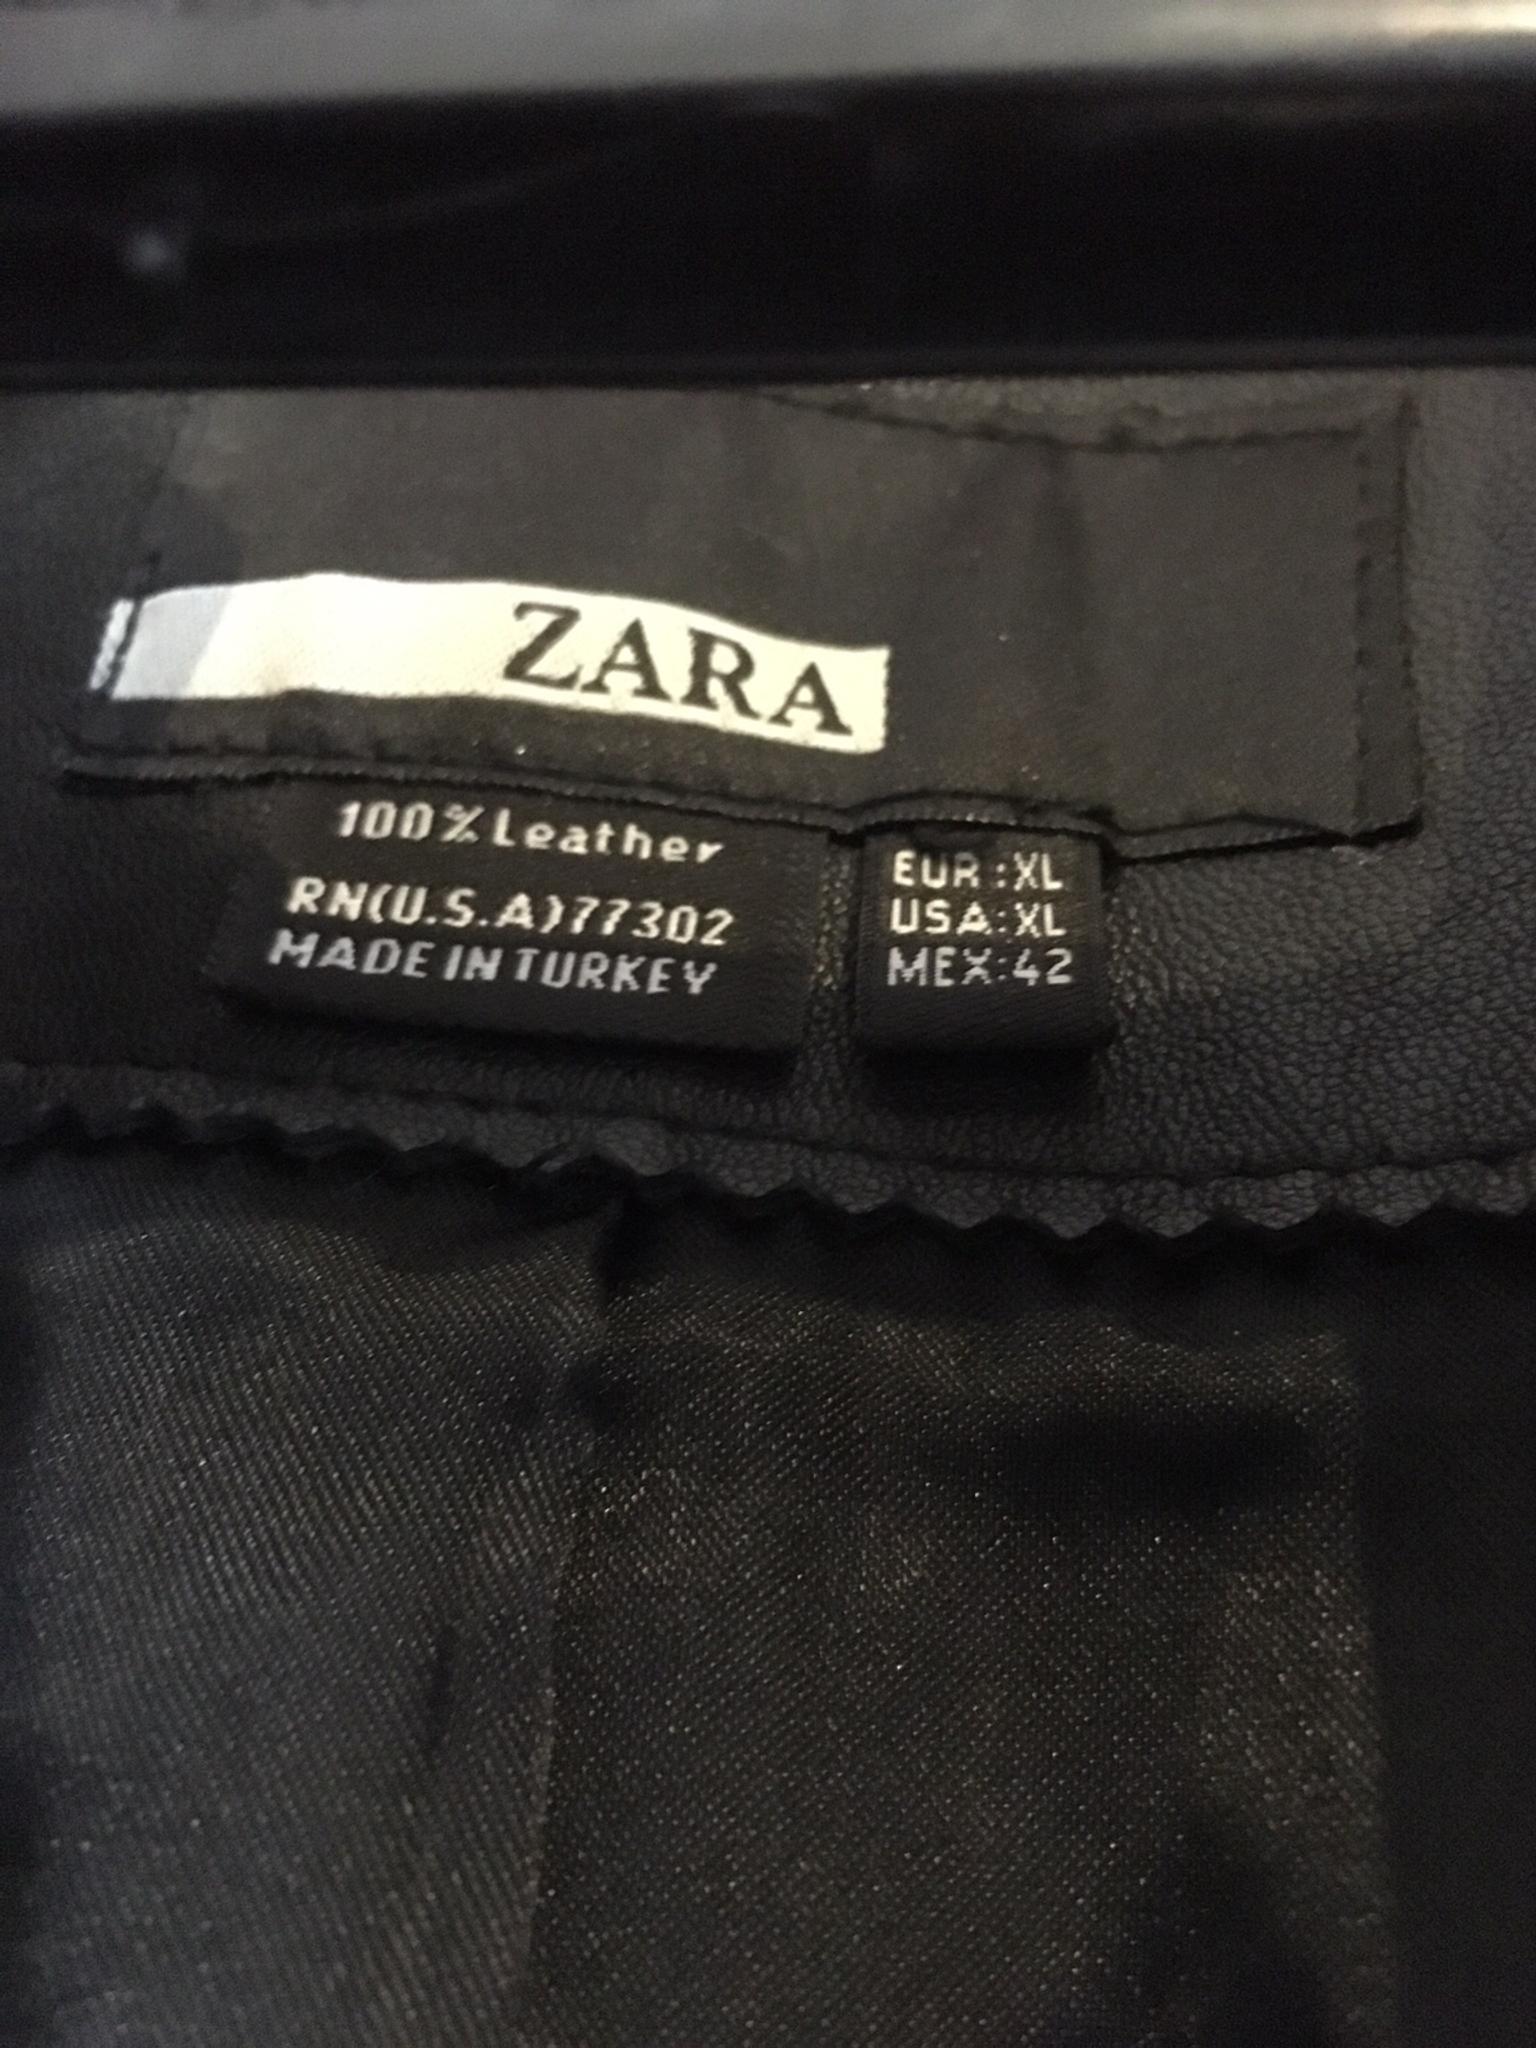 zara 77302 jacket